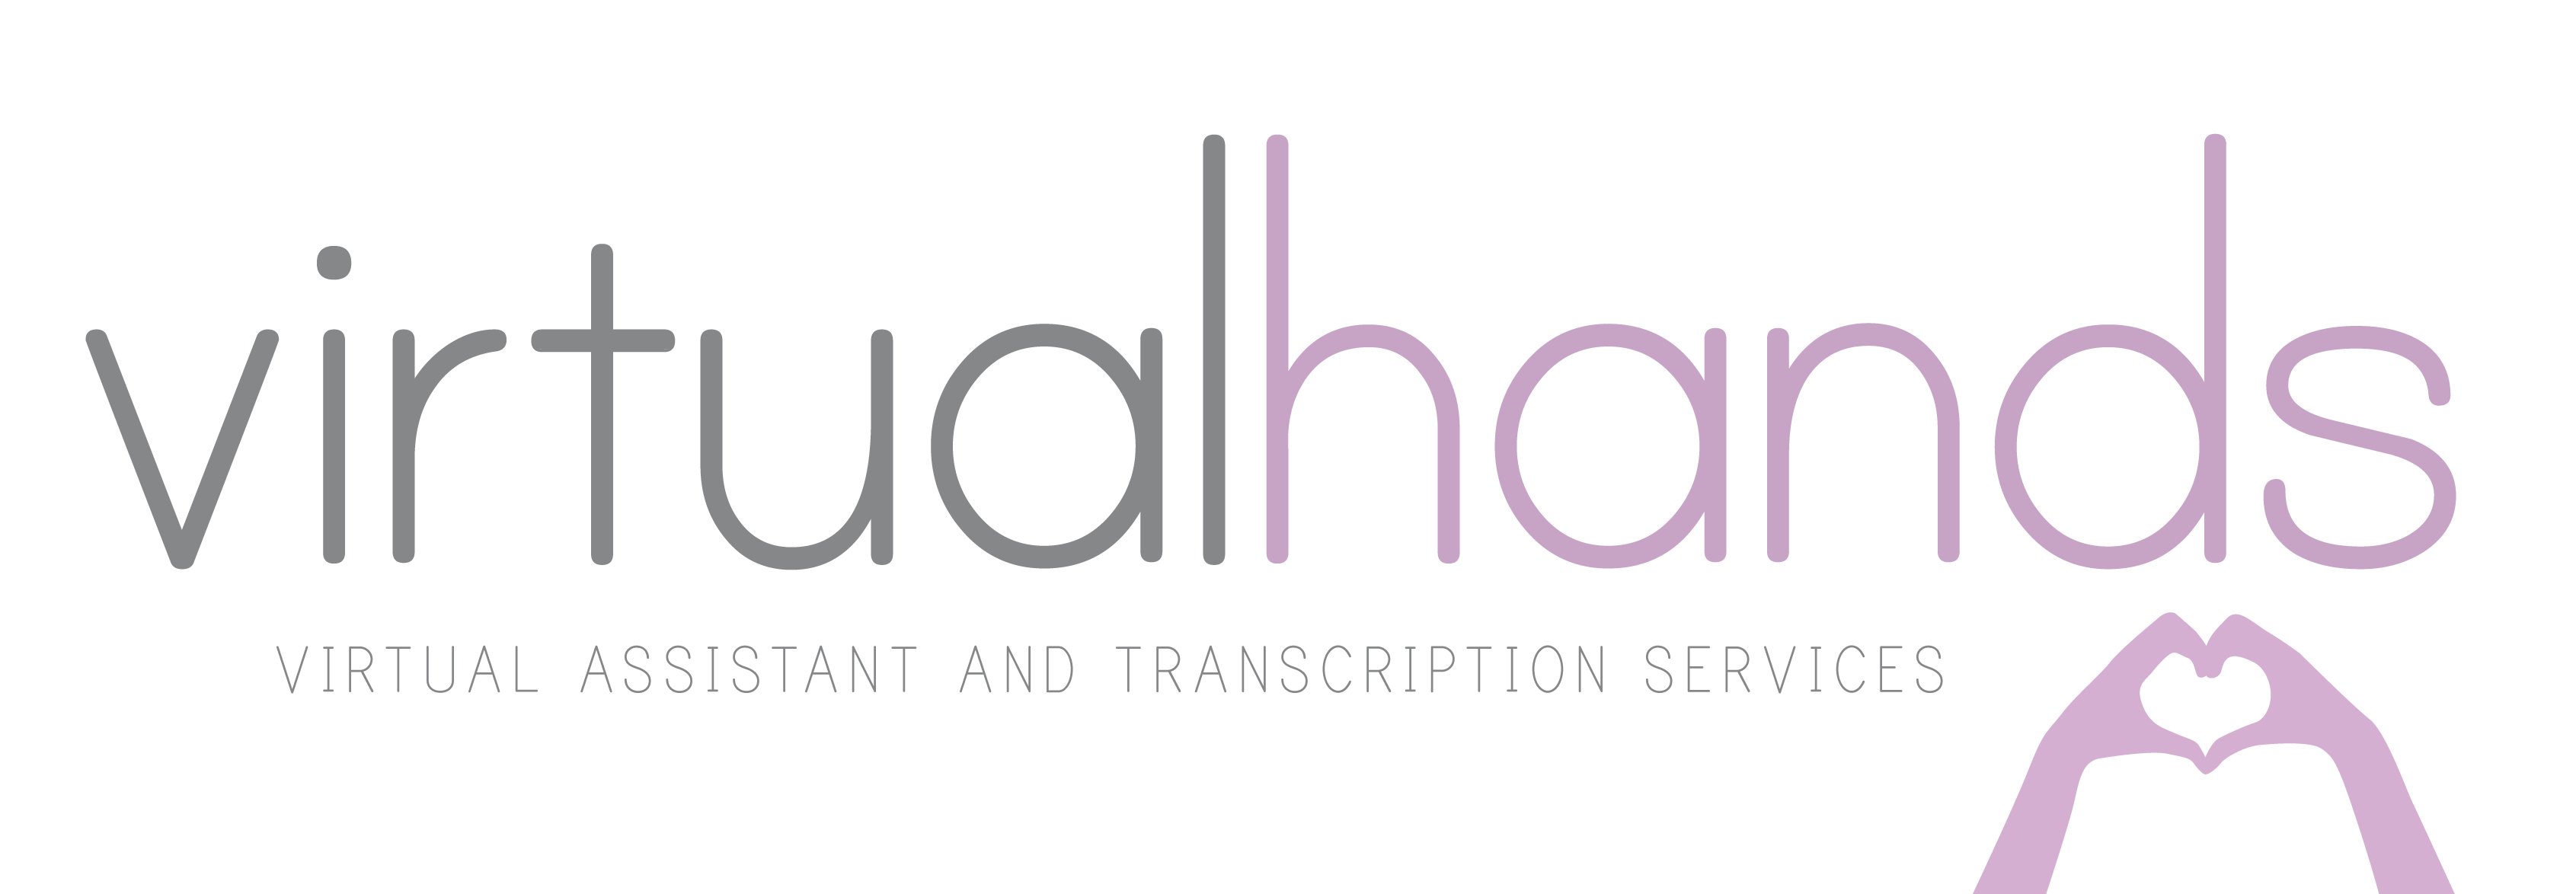 VirtualHands - Virtual Assistant and Transcription Services